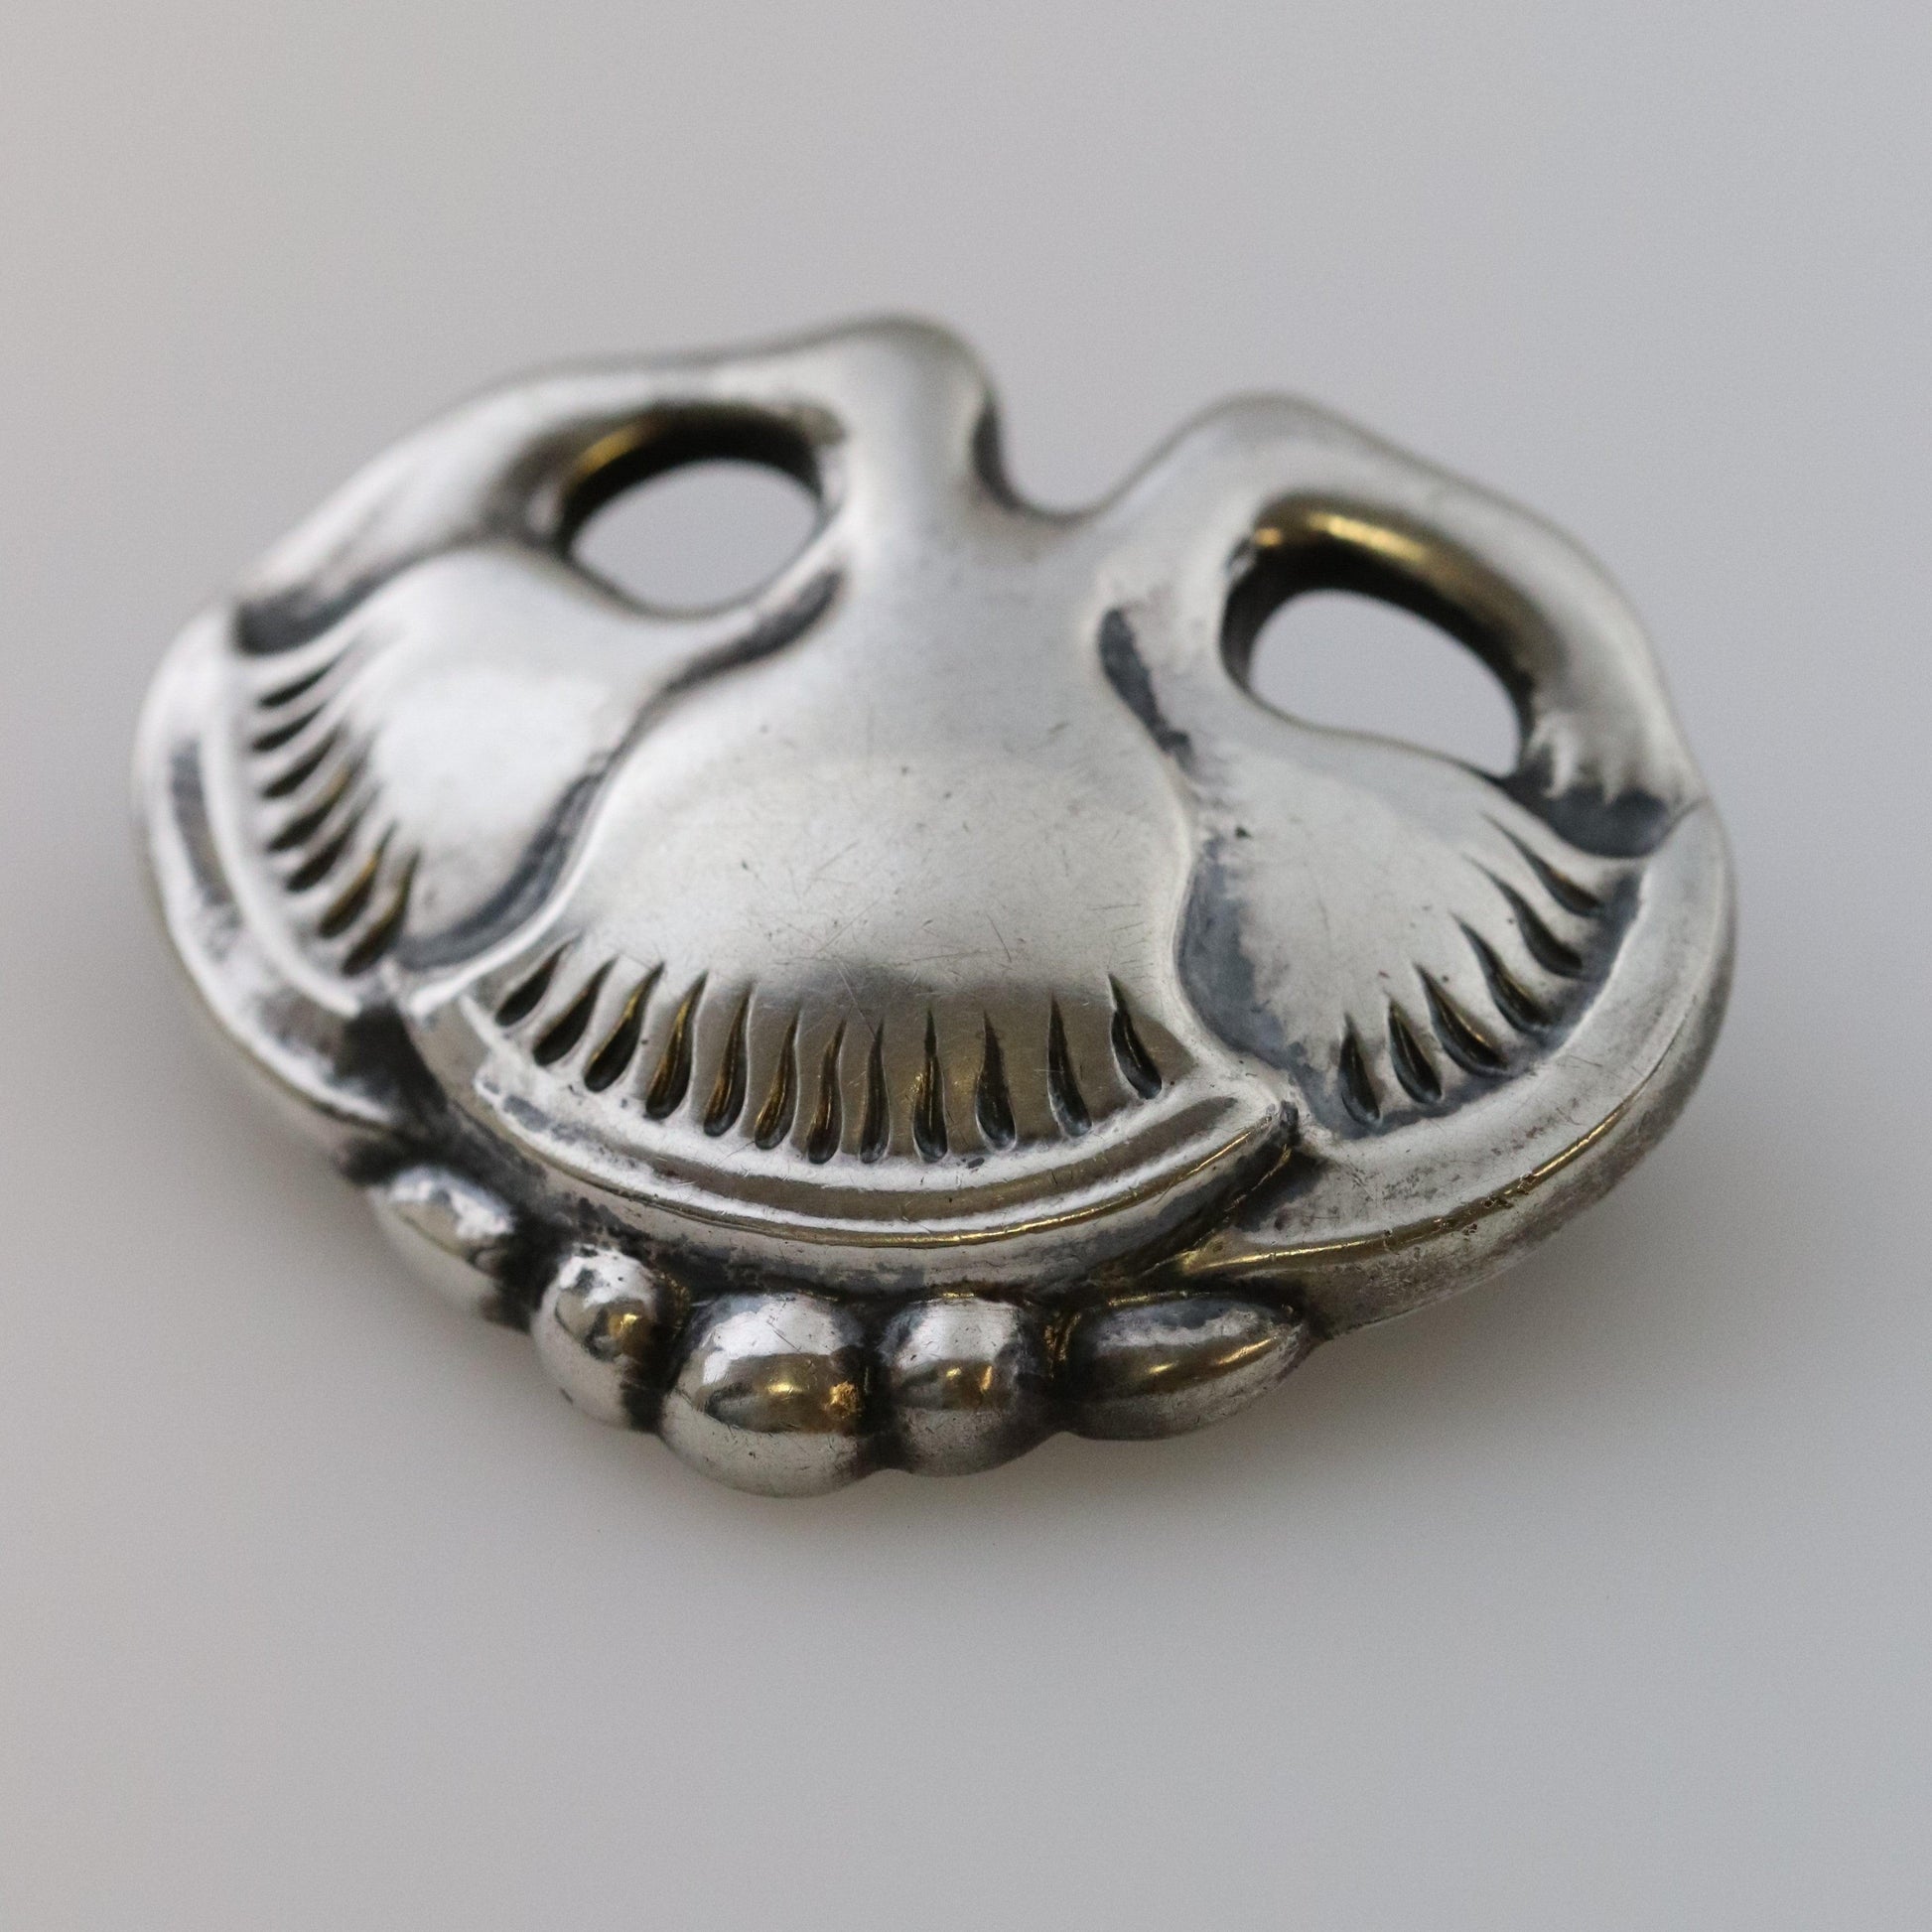 Vintage Georg Jensen Jewelry | Rare Art Nouveau Floral Brooch 29 - Carmel Fine Silver Jewelry